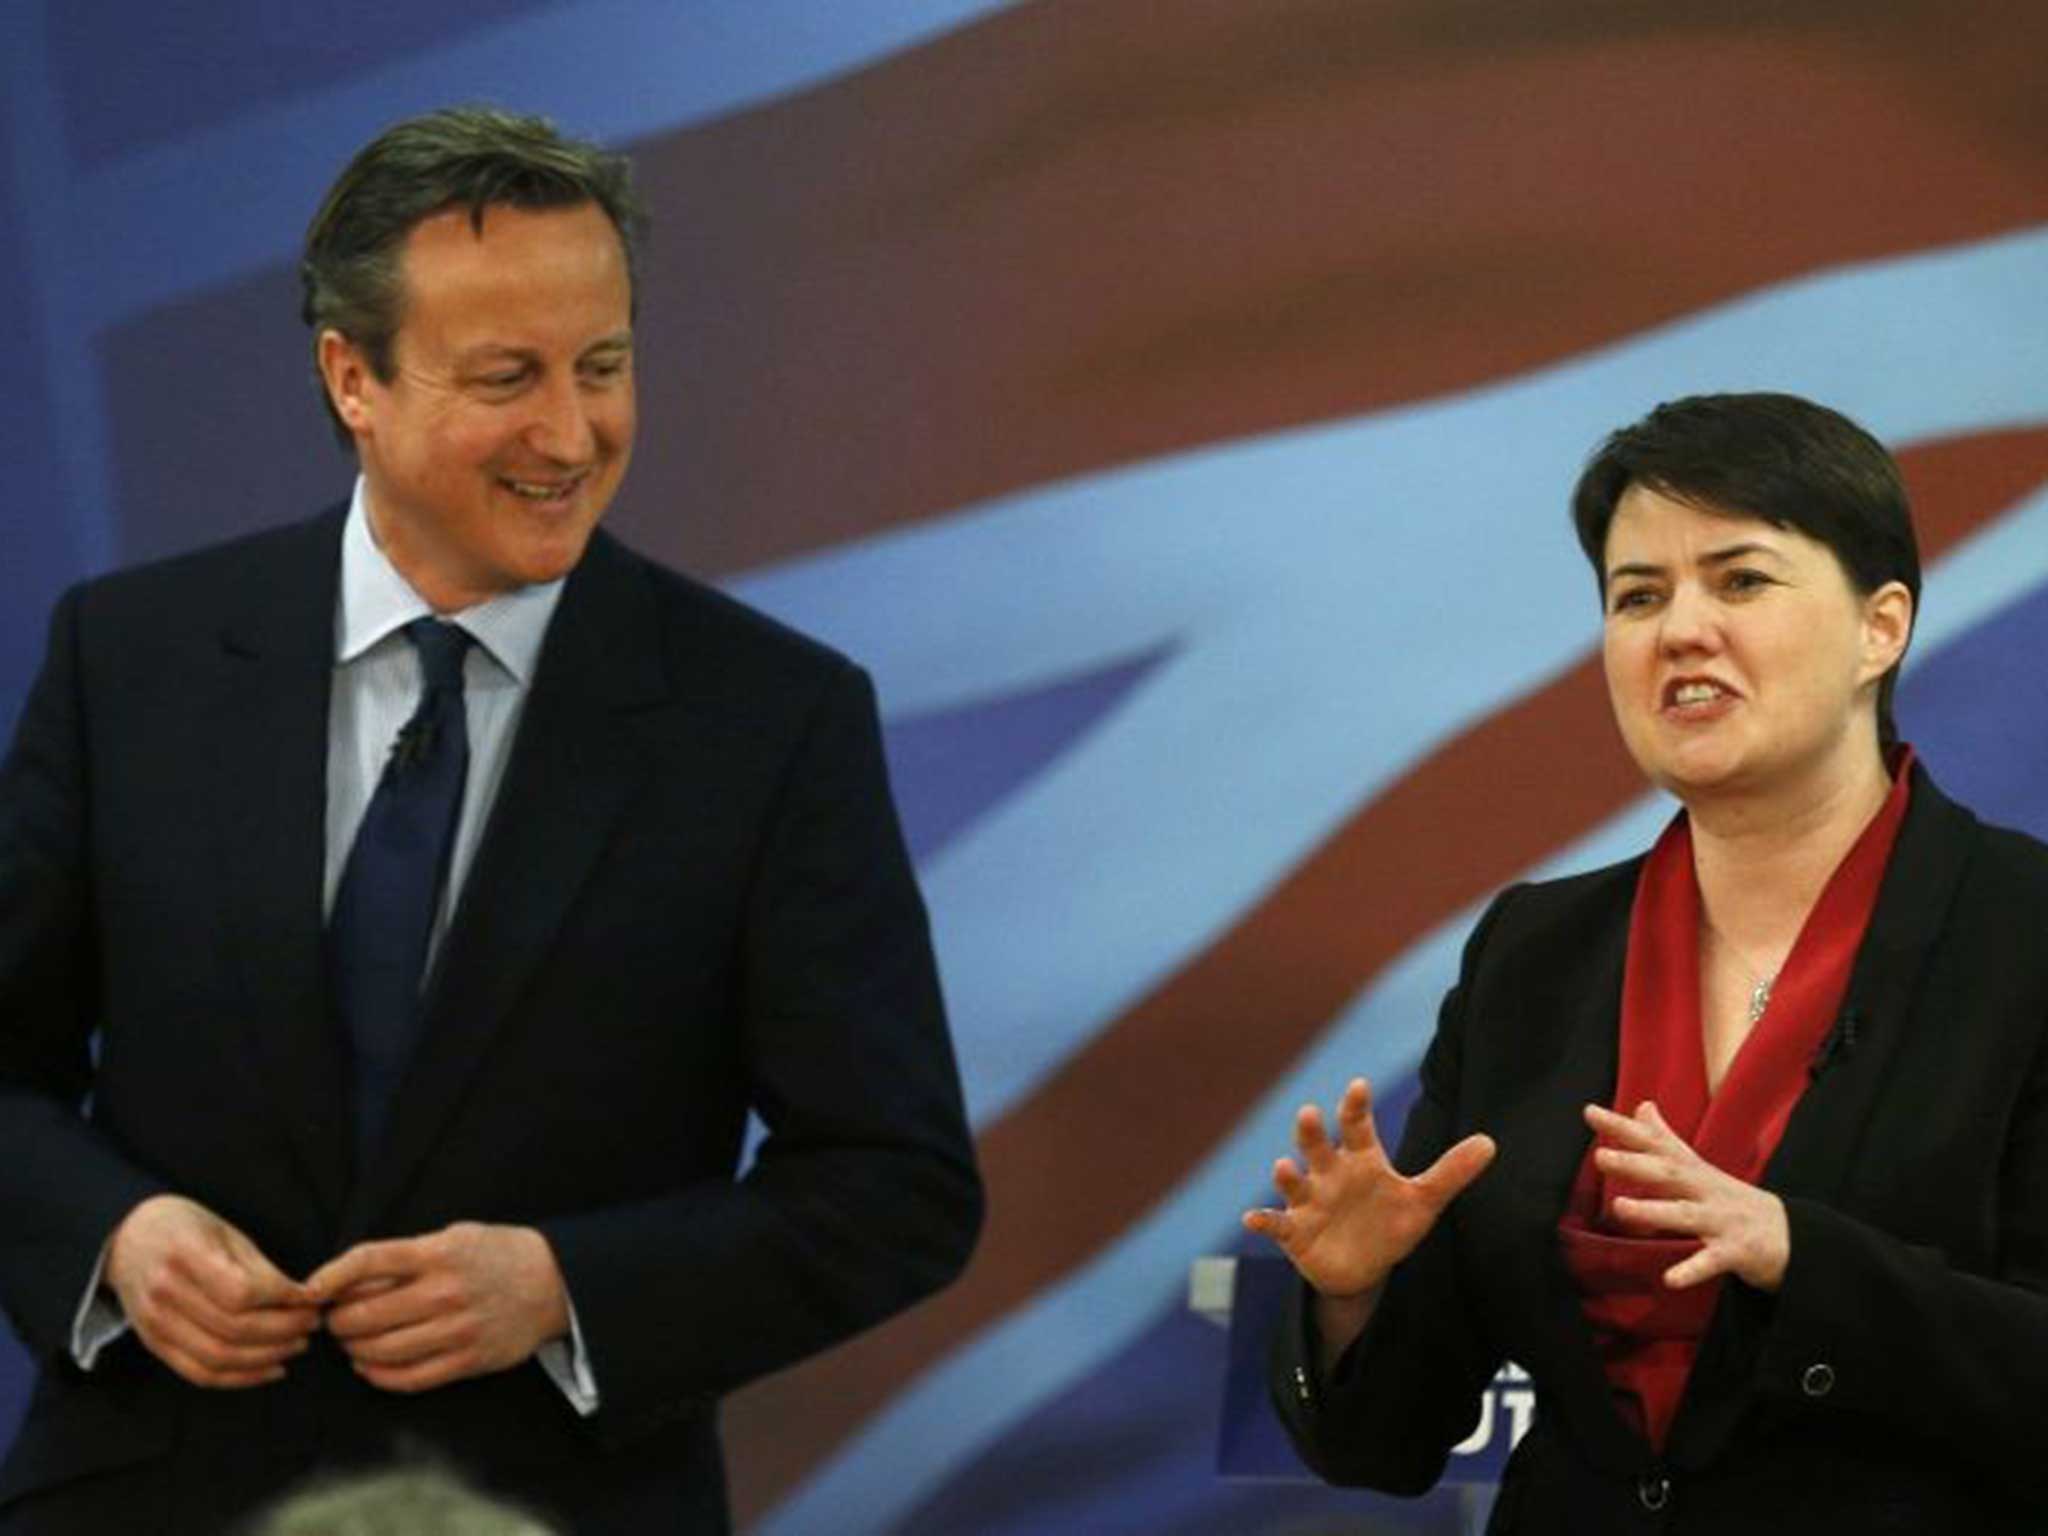 Prime Minister David Cameron listens to Scottish Conservative Leader Ruth Davidson at the launch of the Scottish Conservative manifesto